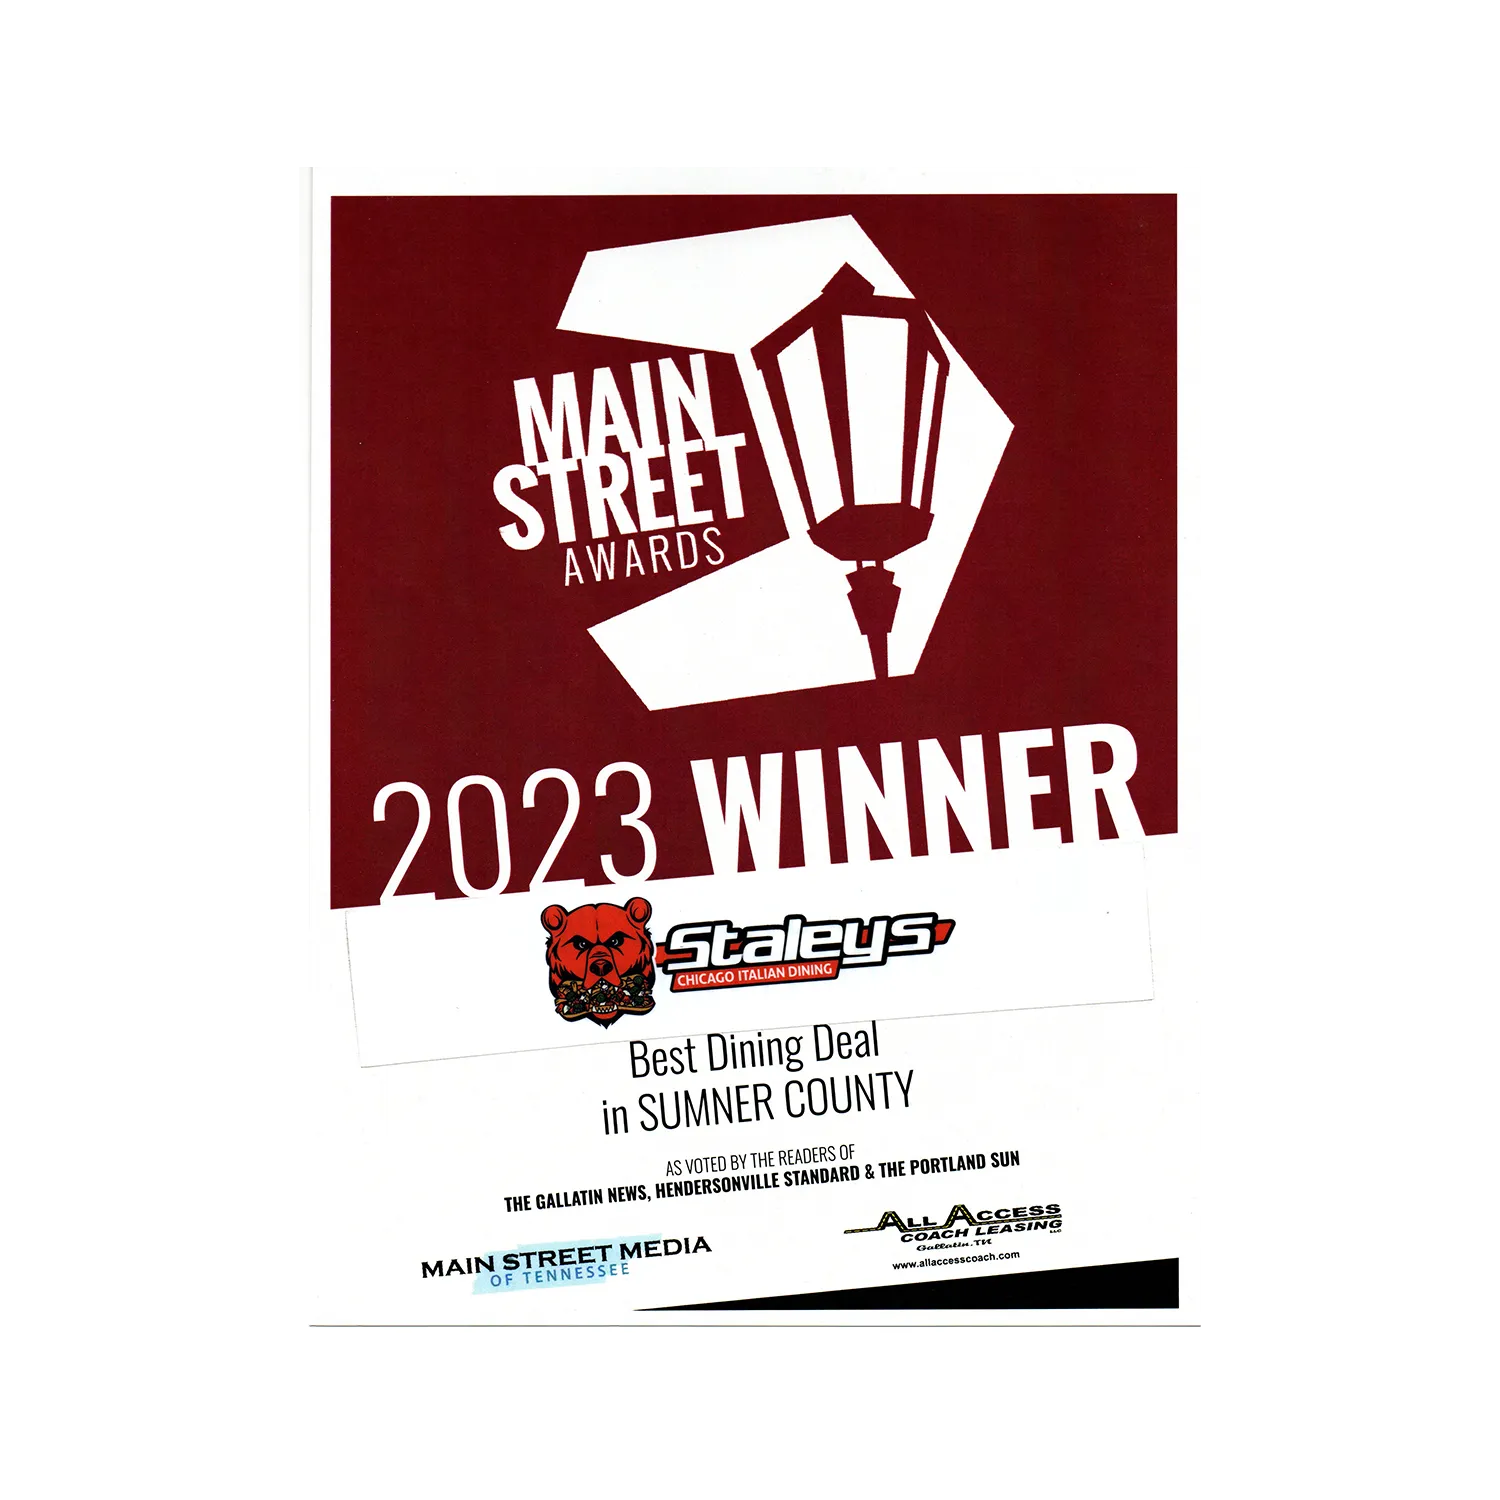 Main Street Awards Best Dining Deal Sumner County